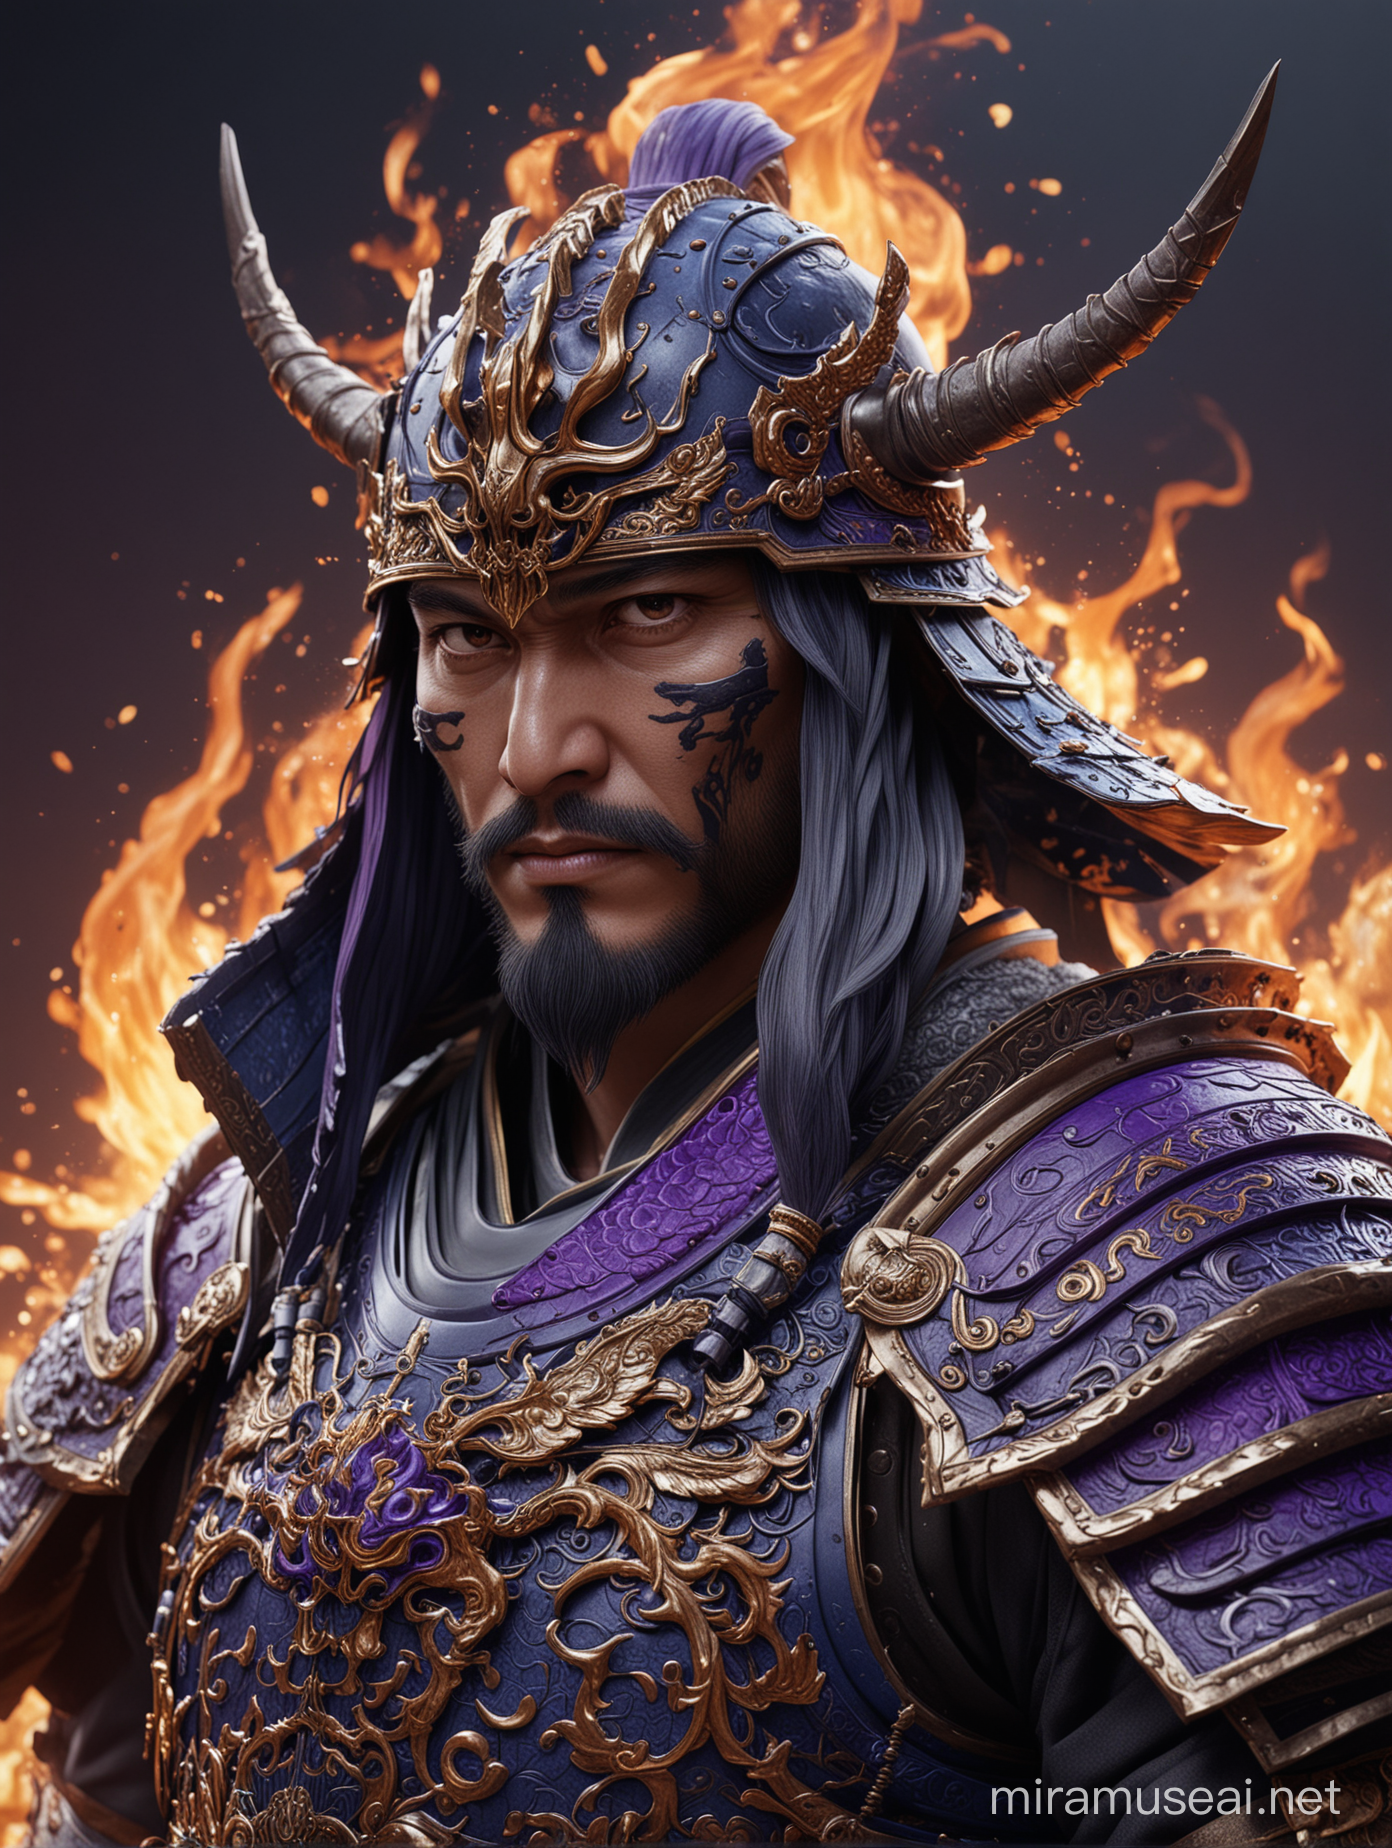 Flaming Samurai King in Intricate Chinese Armor Hyperrealistic Digital Illustration